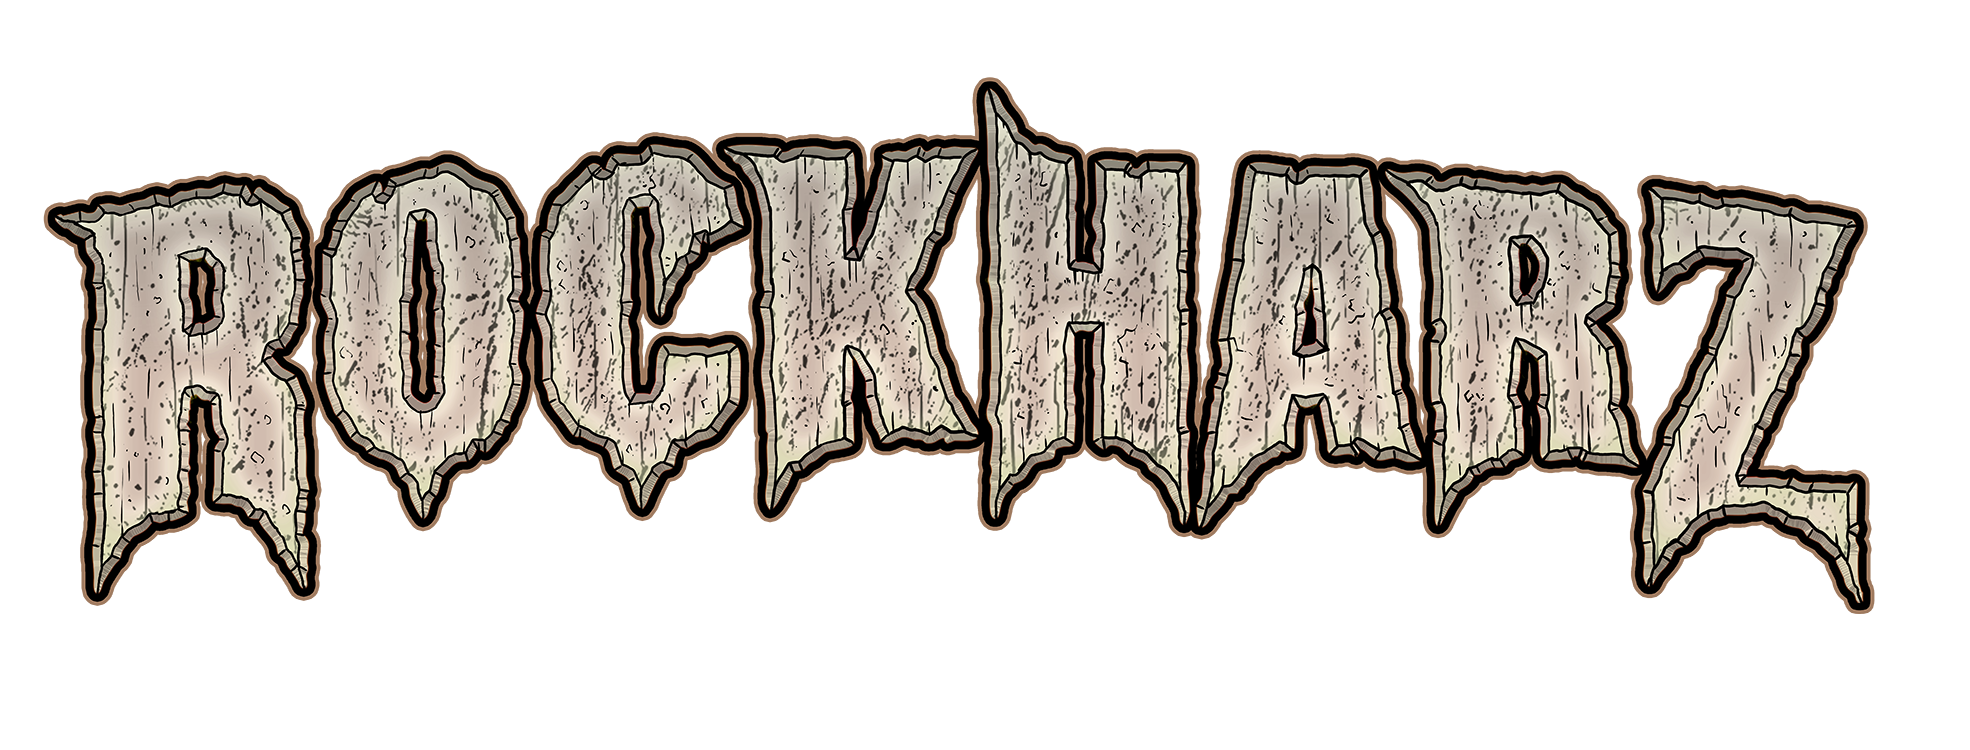 rockharz logo